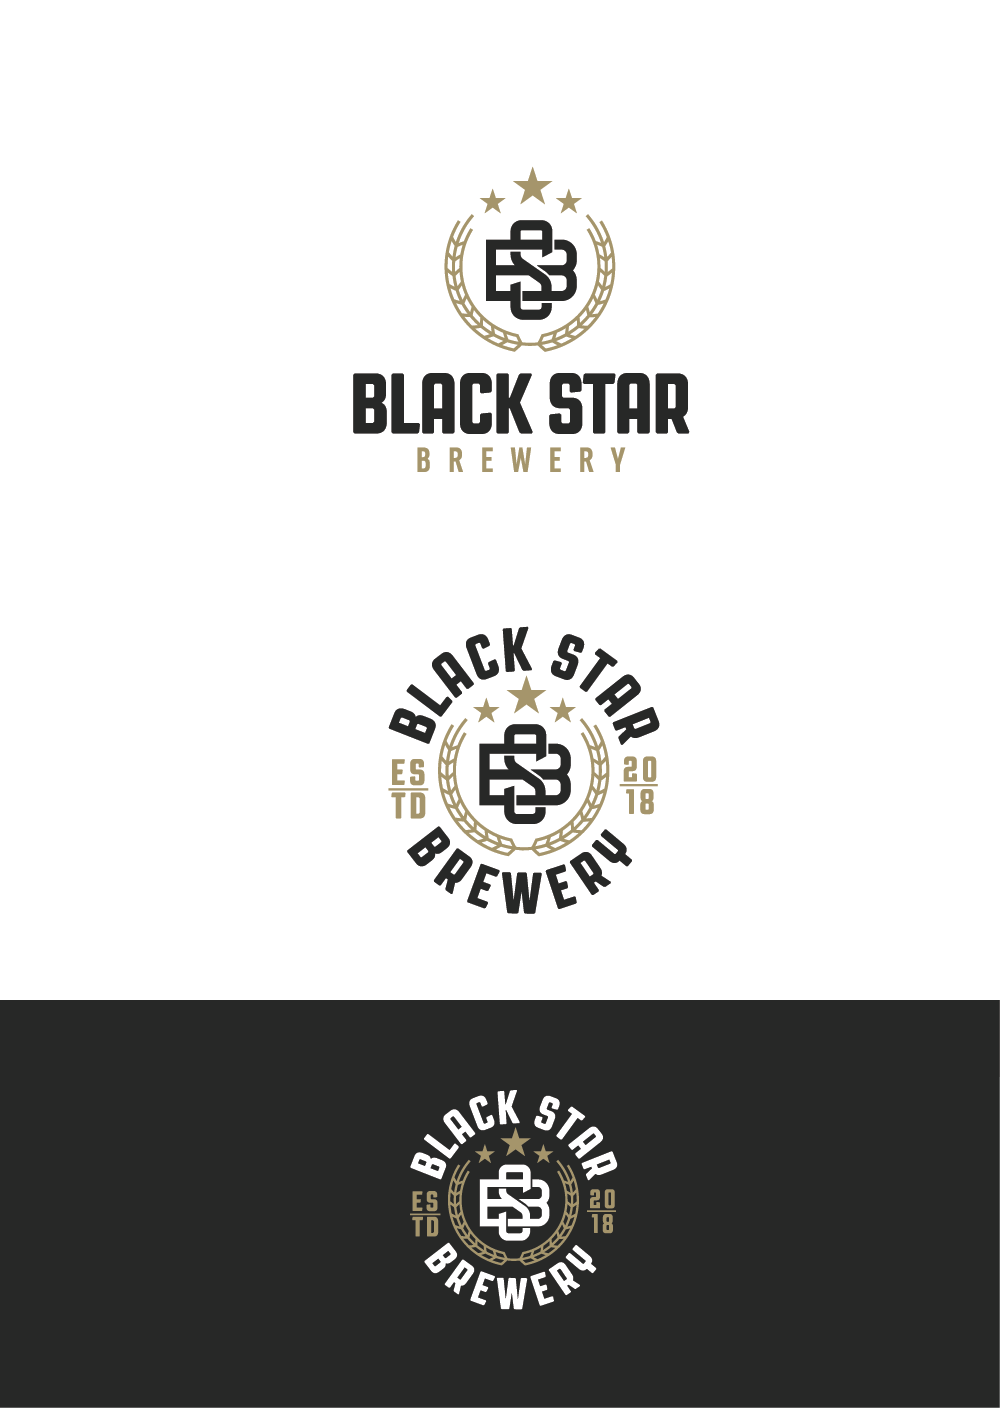 Black Star in Circle Company Logo - Logo Design for Black Star Brewery Co. by NenadM. Design